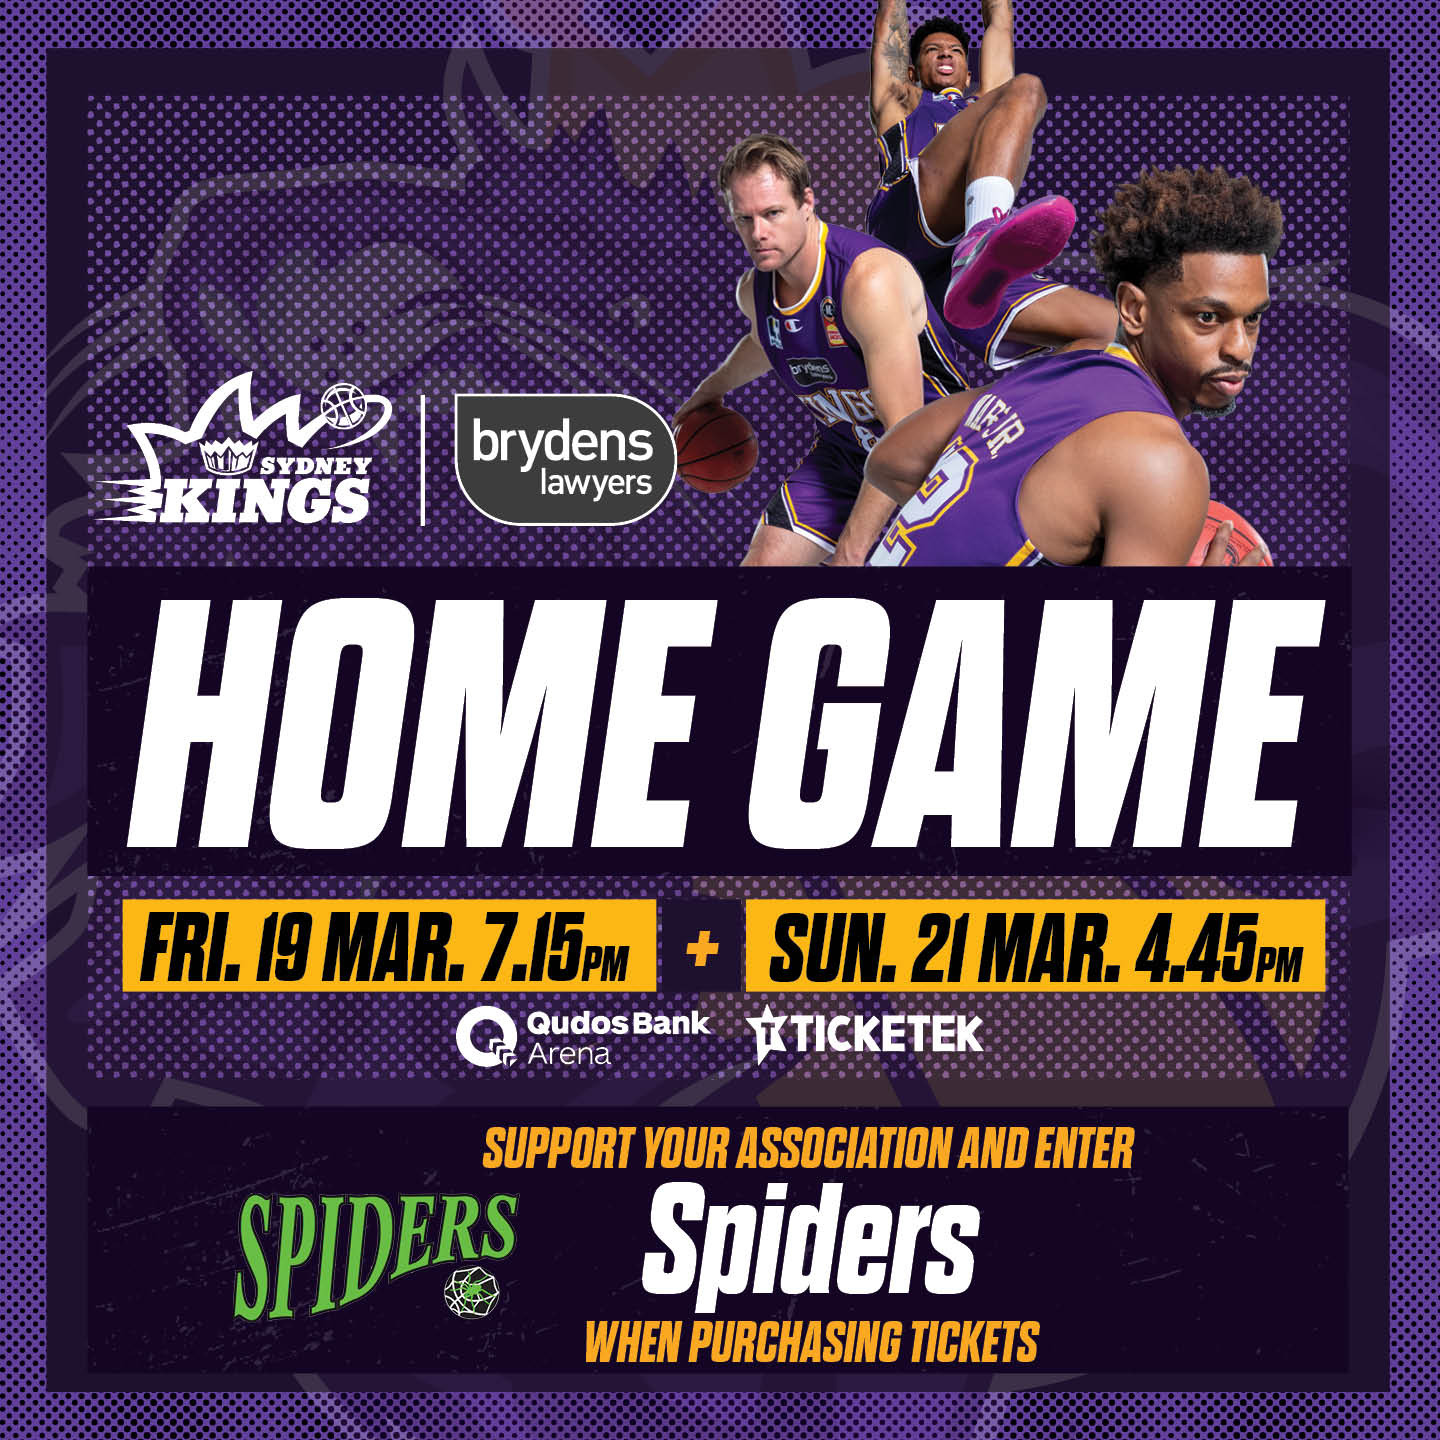 Sydney Kings LIVE at Qudos Bank Arena this week-end - Hornsby Ku Ring Gai Basketball Association